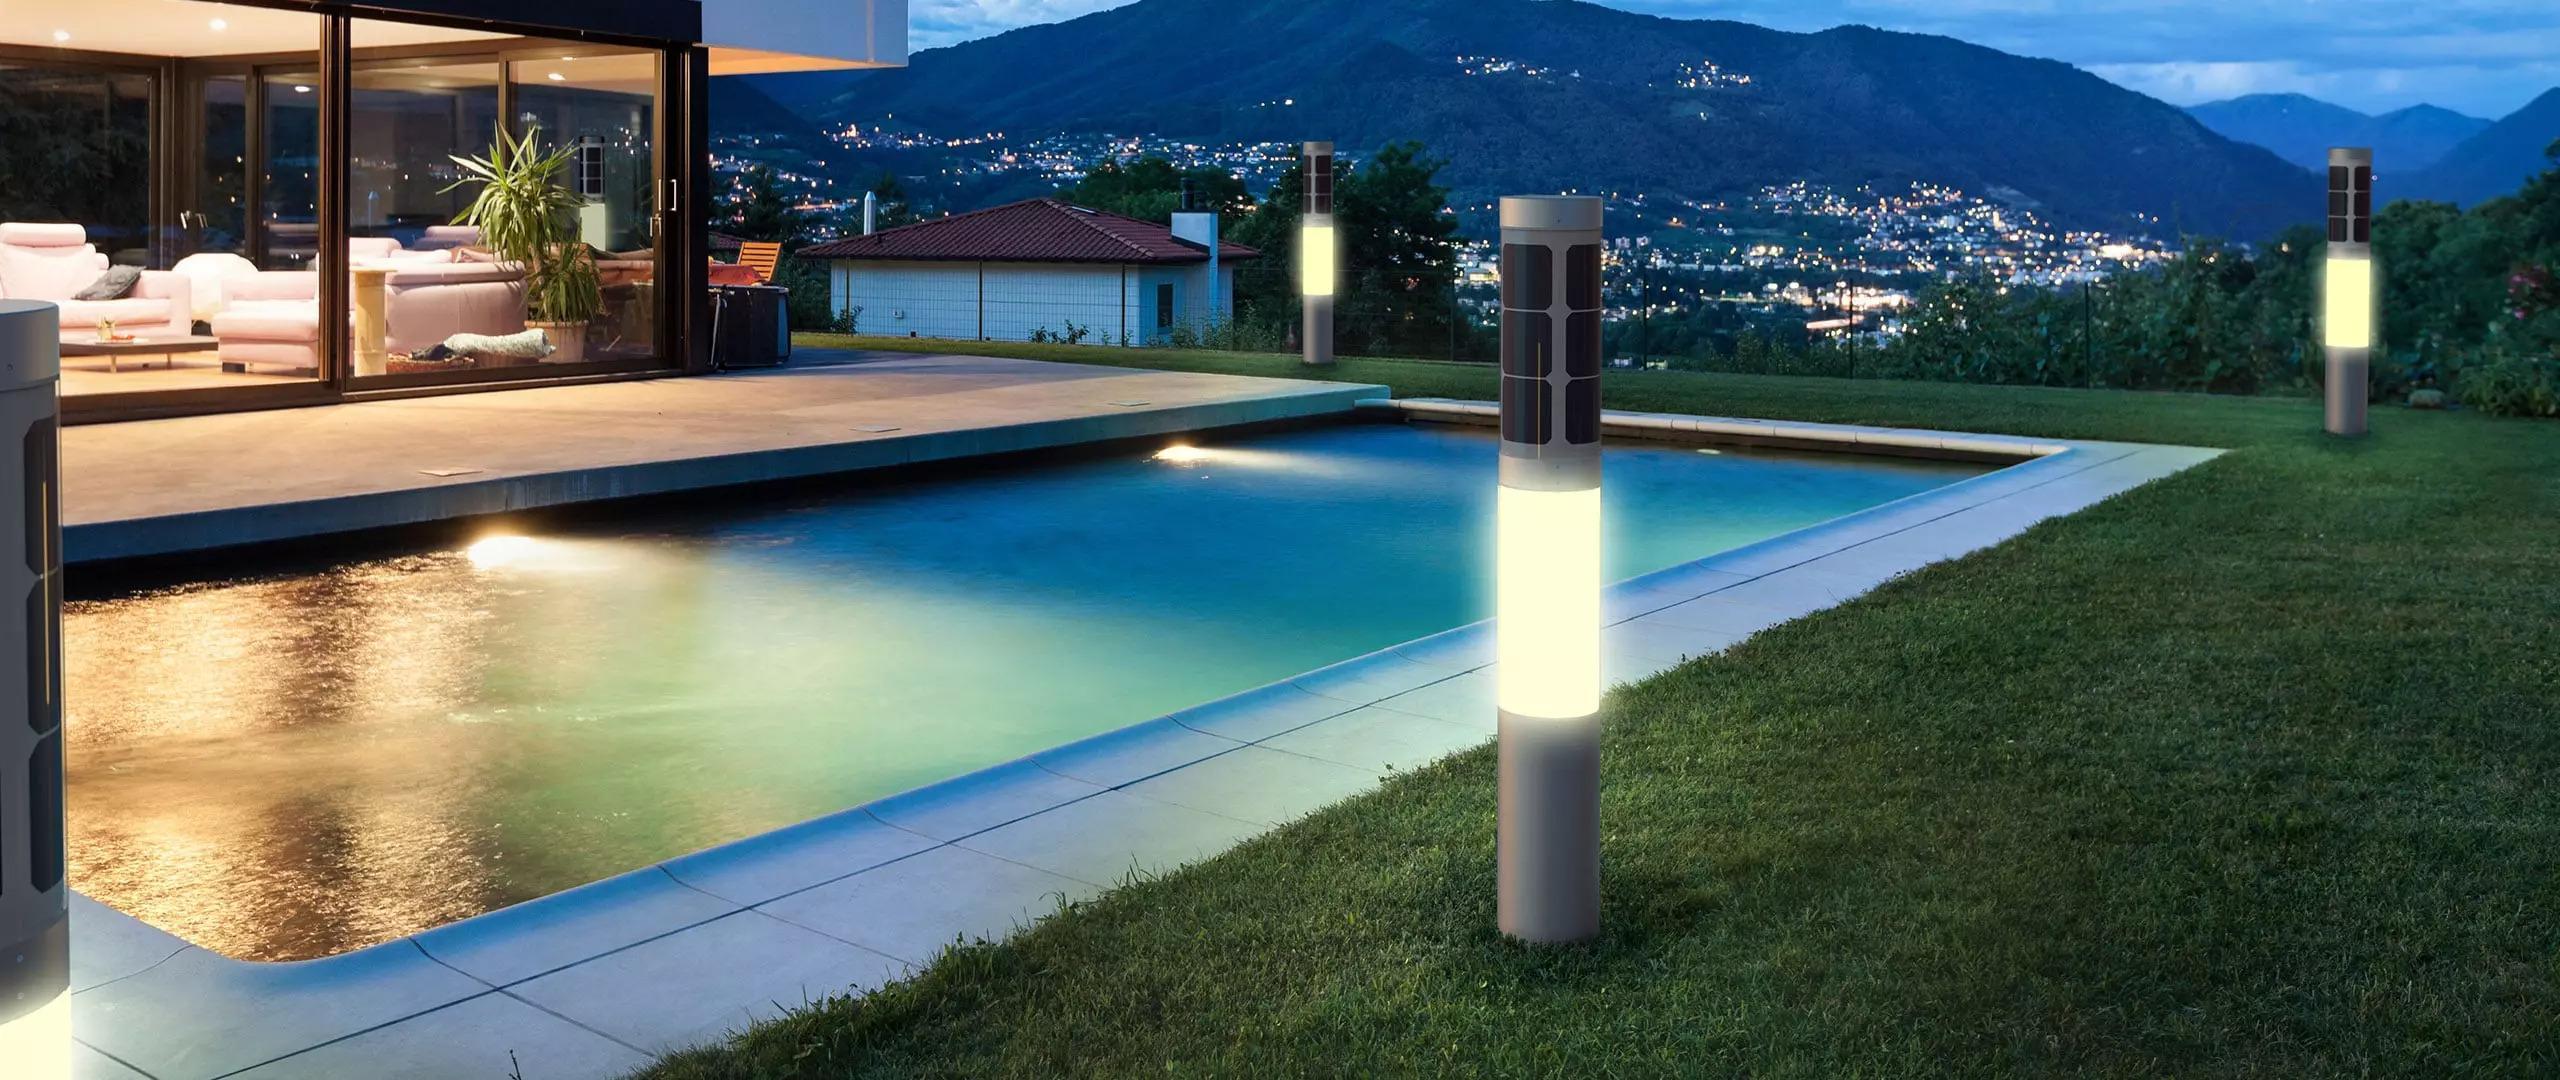 NxT solar bollard in villa garden - yard lighting design